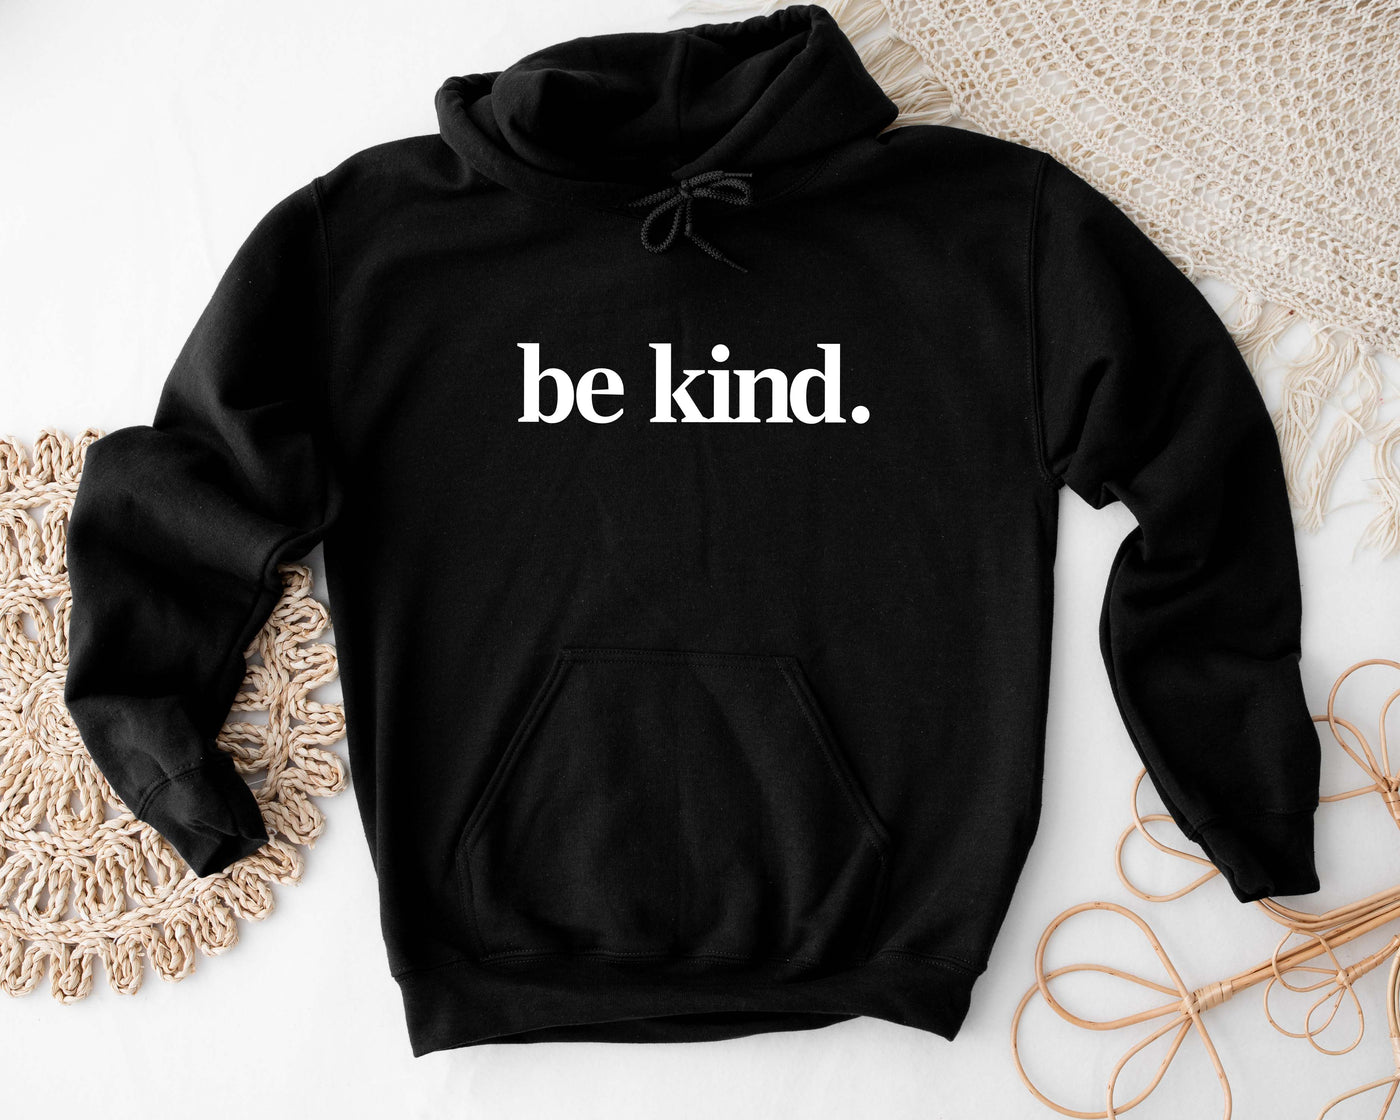 Be Kind. Hoodie Black Fleece Selfawear 